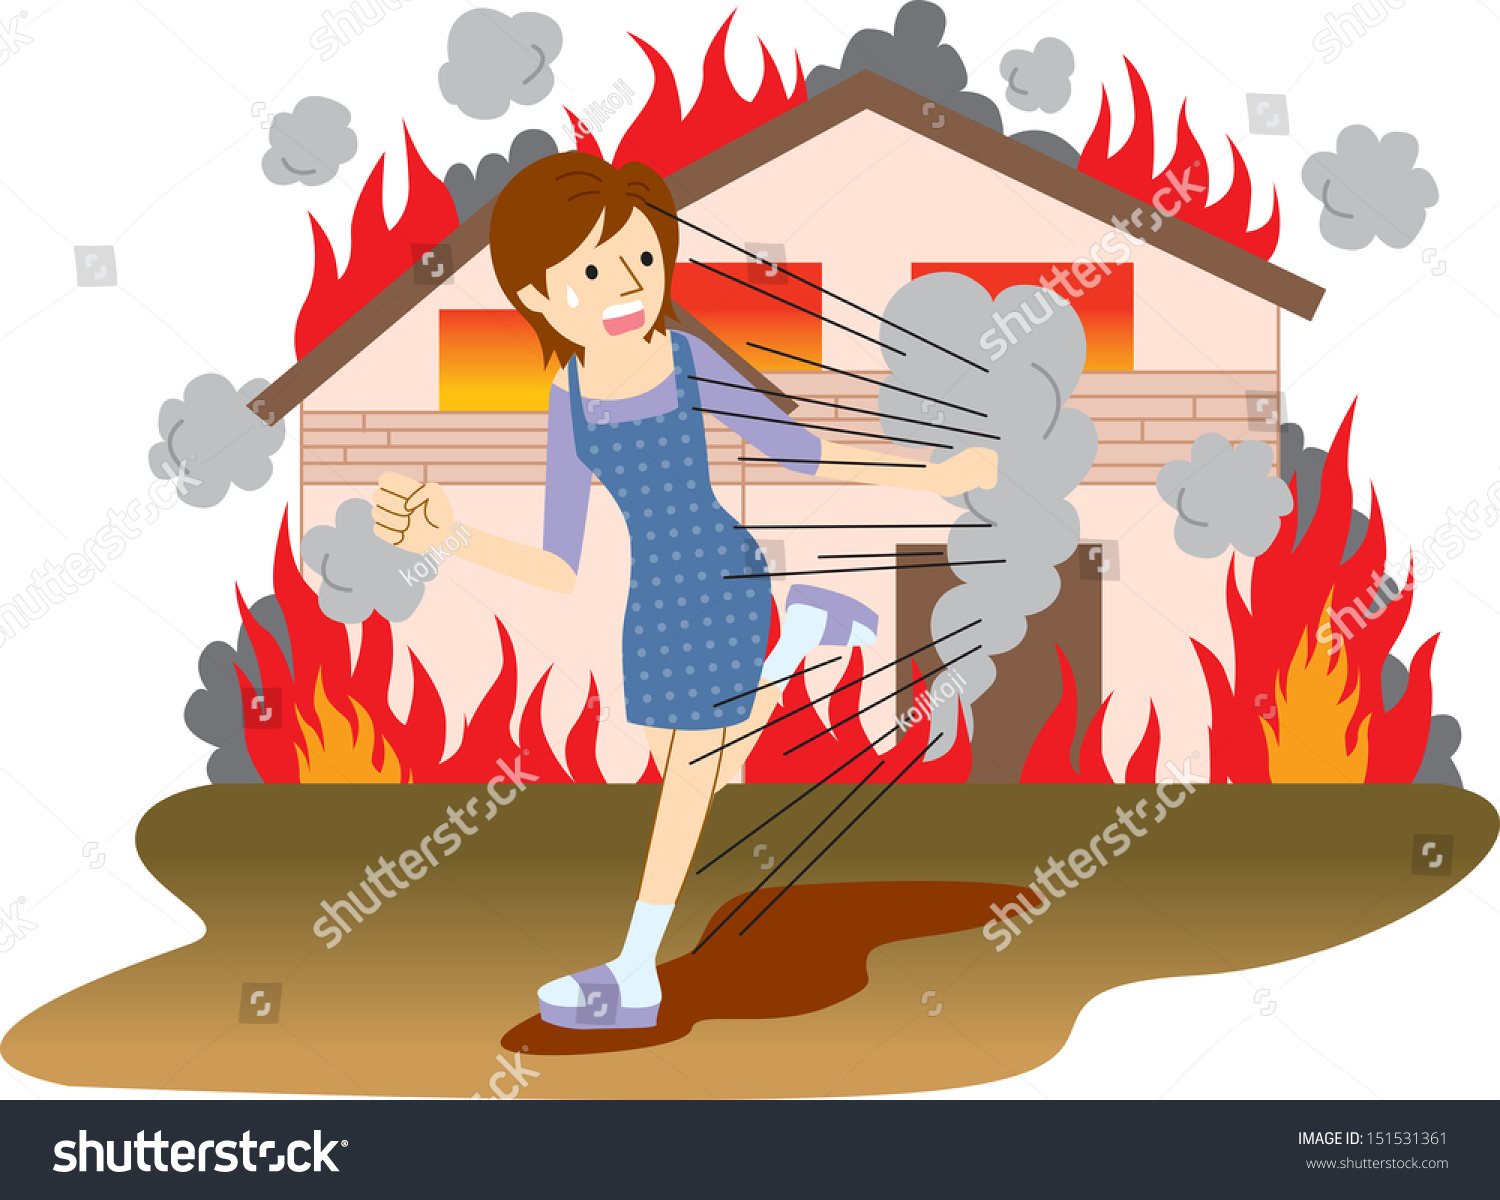 Fire Stock Illustration 151531361 - Shutterstock